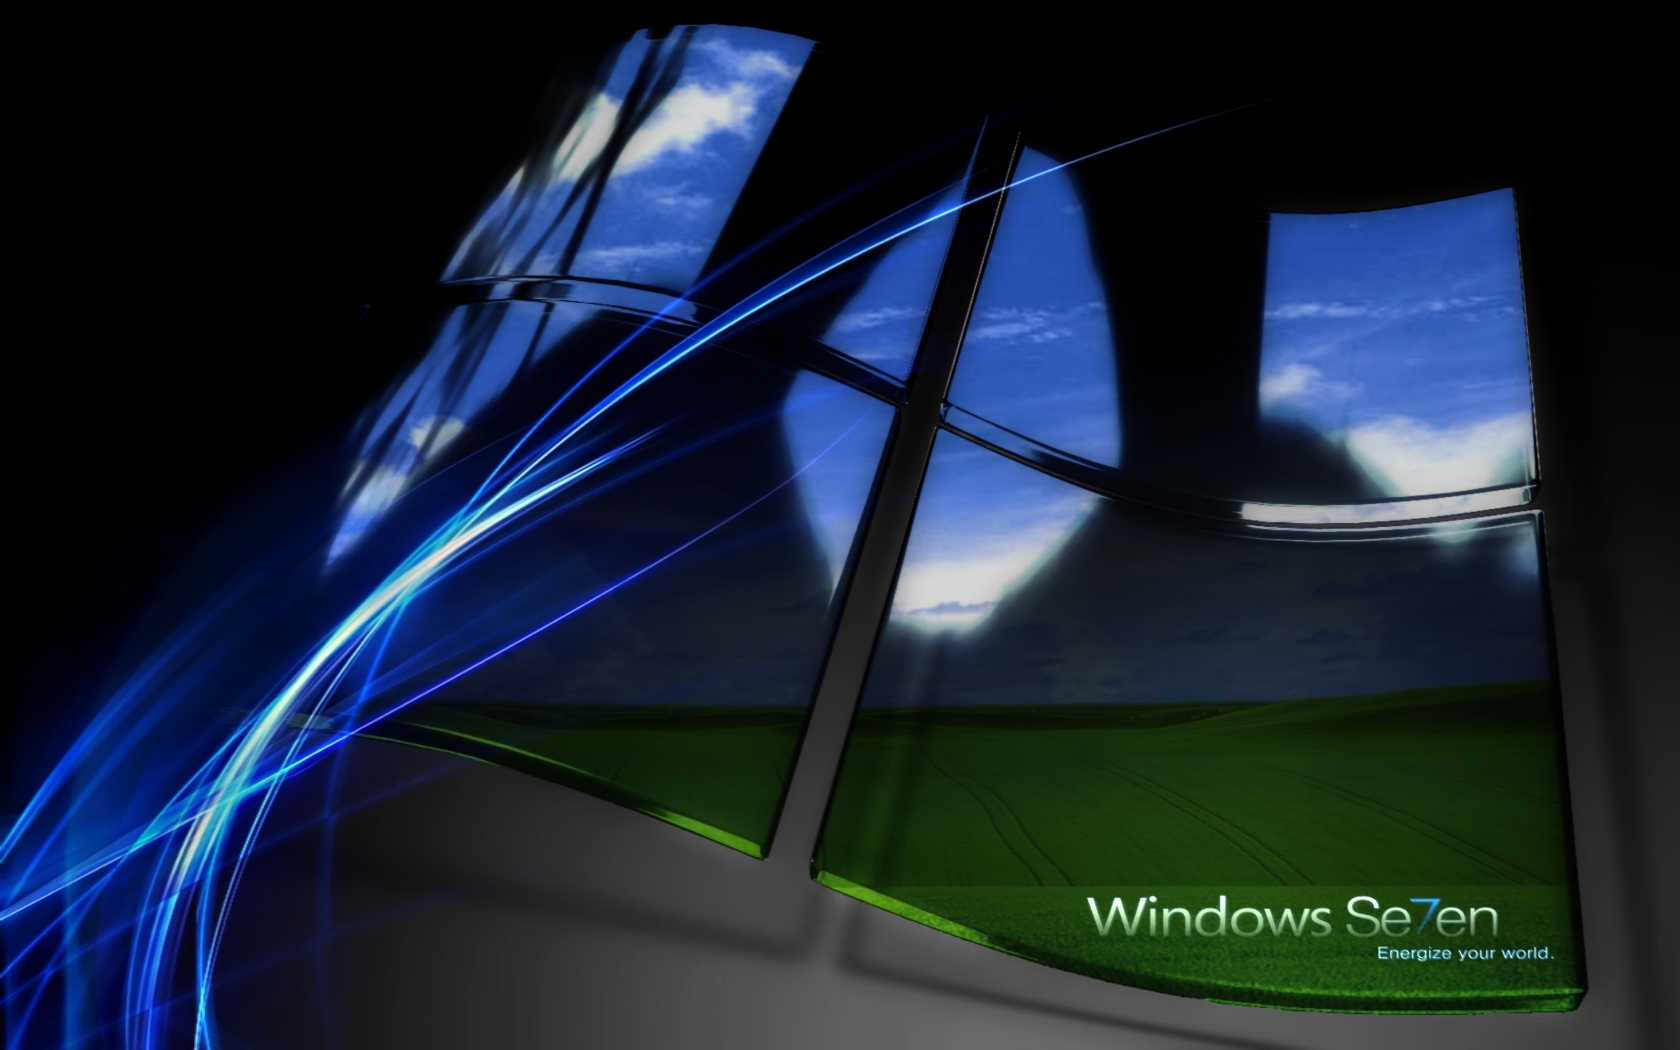 47+] Windows 7 Ultimate Backgrounds - WallpaperSafari